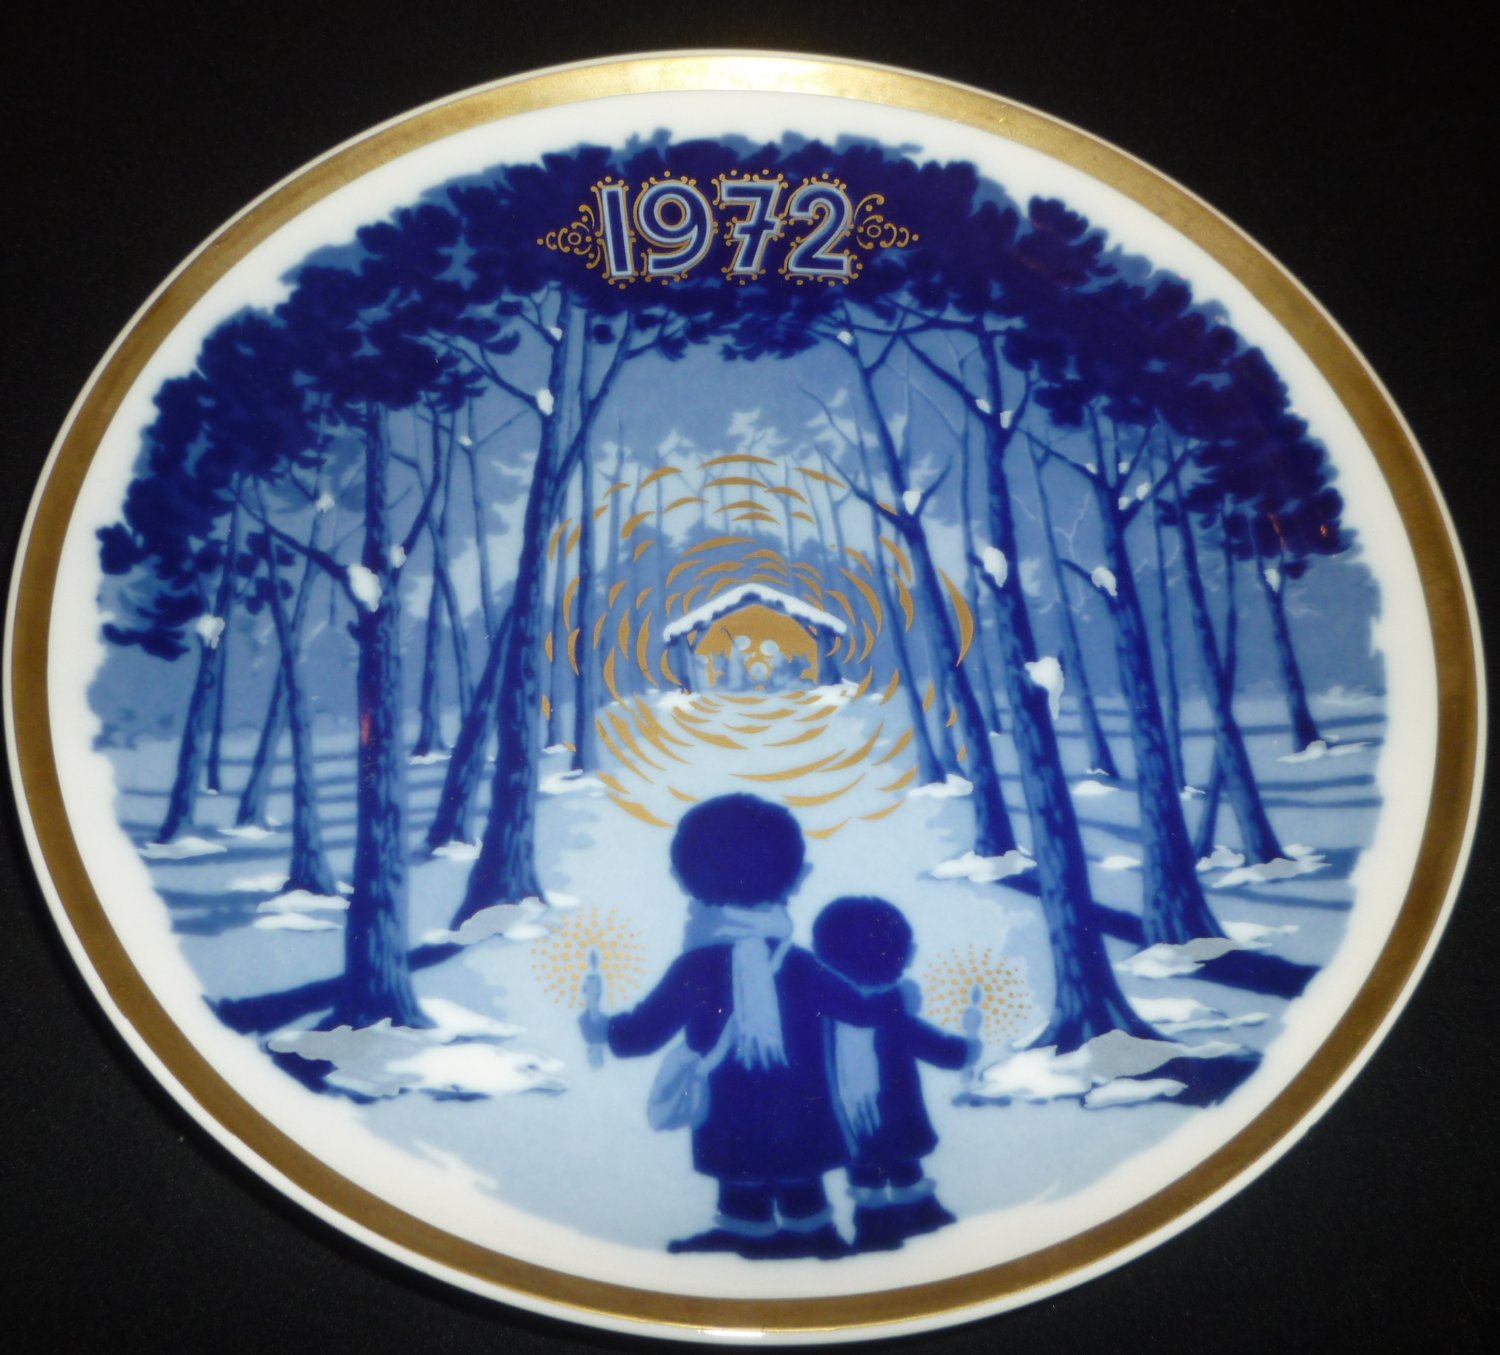 SANTA CLARA BLUE PORCELAIN COLLECTIBLE PLATE #2389 MARIA MENDEZ CHRISTMAS 1972